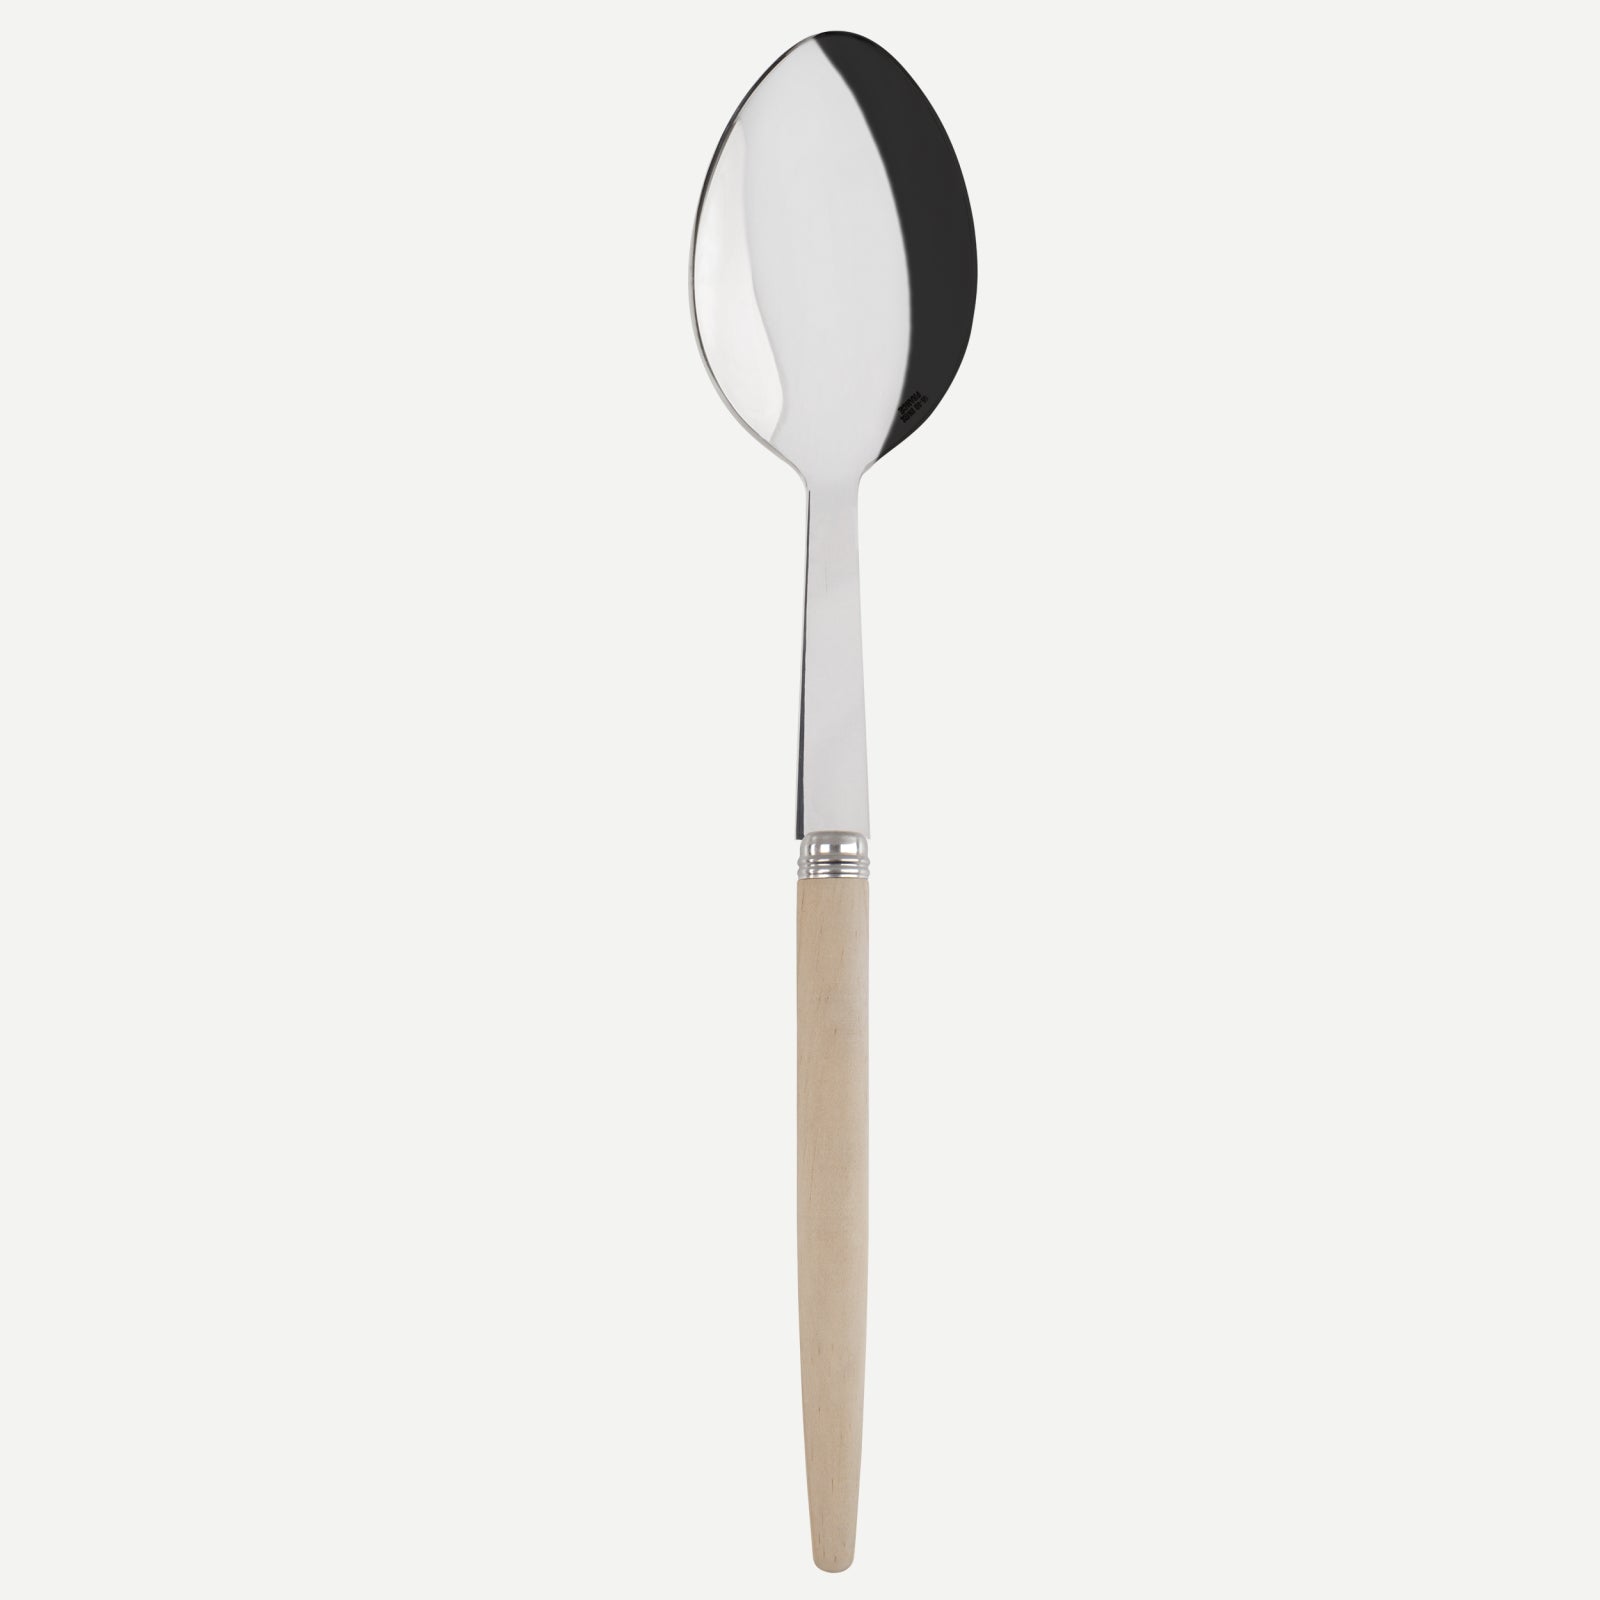 Serving spoon - Jonc - Light wood